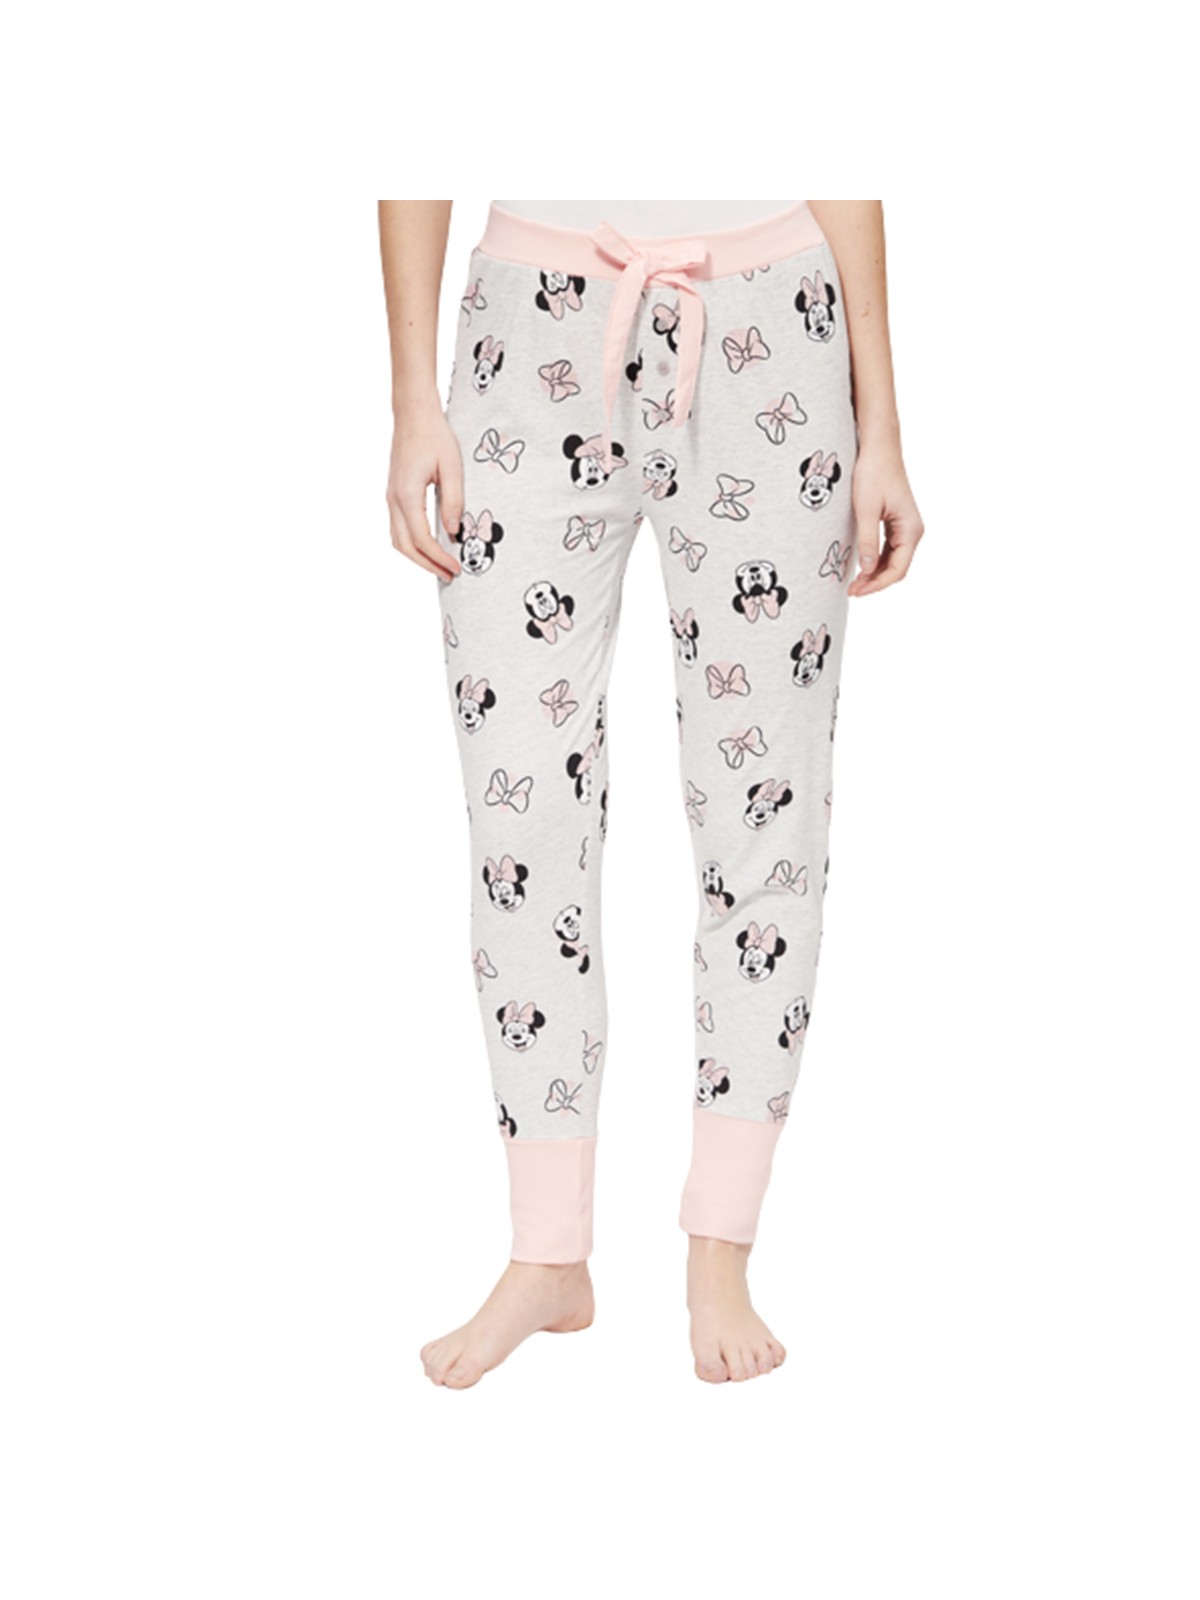 Minnie Pajama pants women